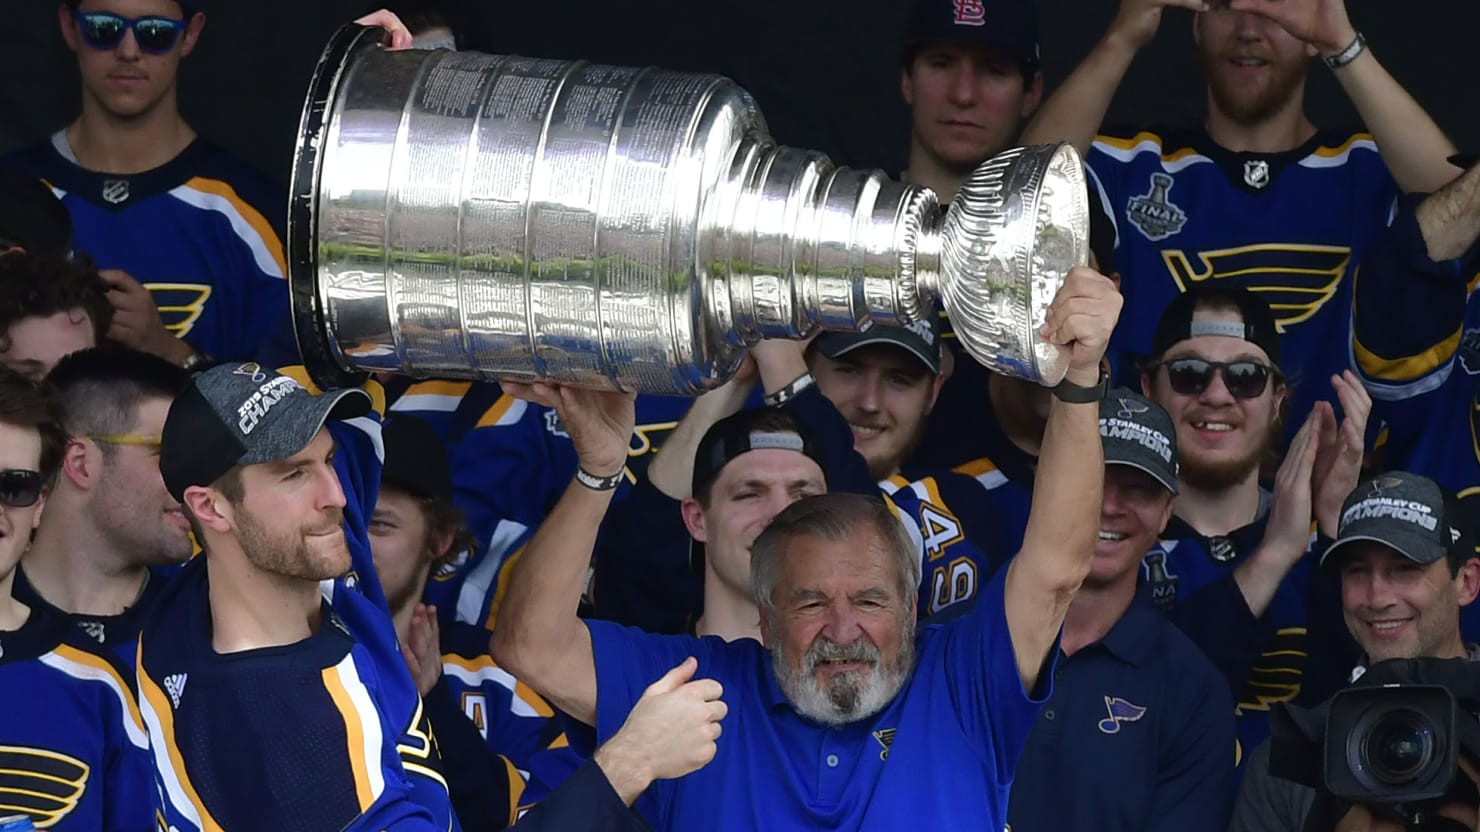 St. Louis Hockey Legend Bobby Plager Dies at 78 in Car Crash